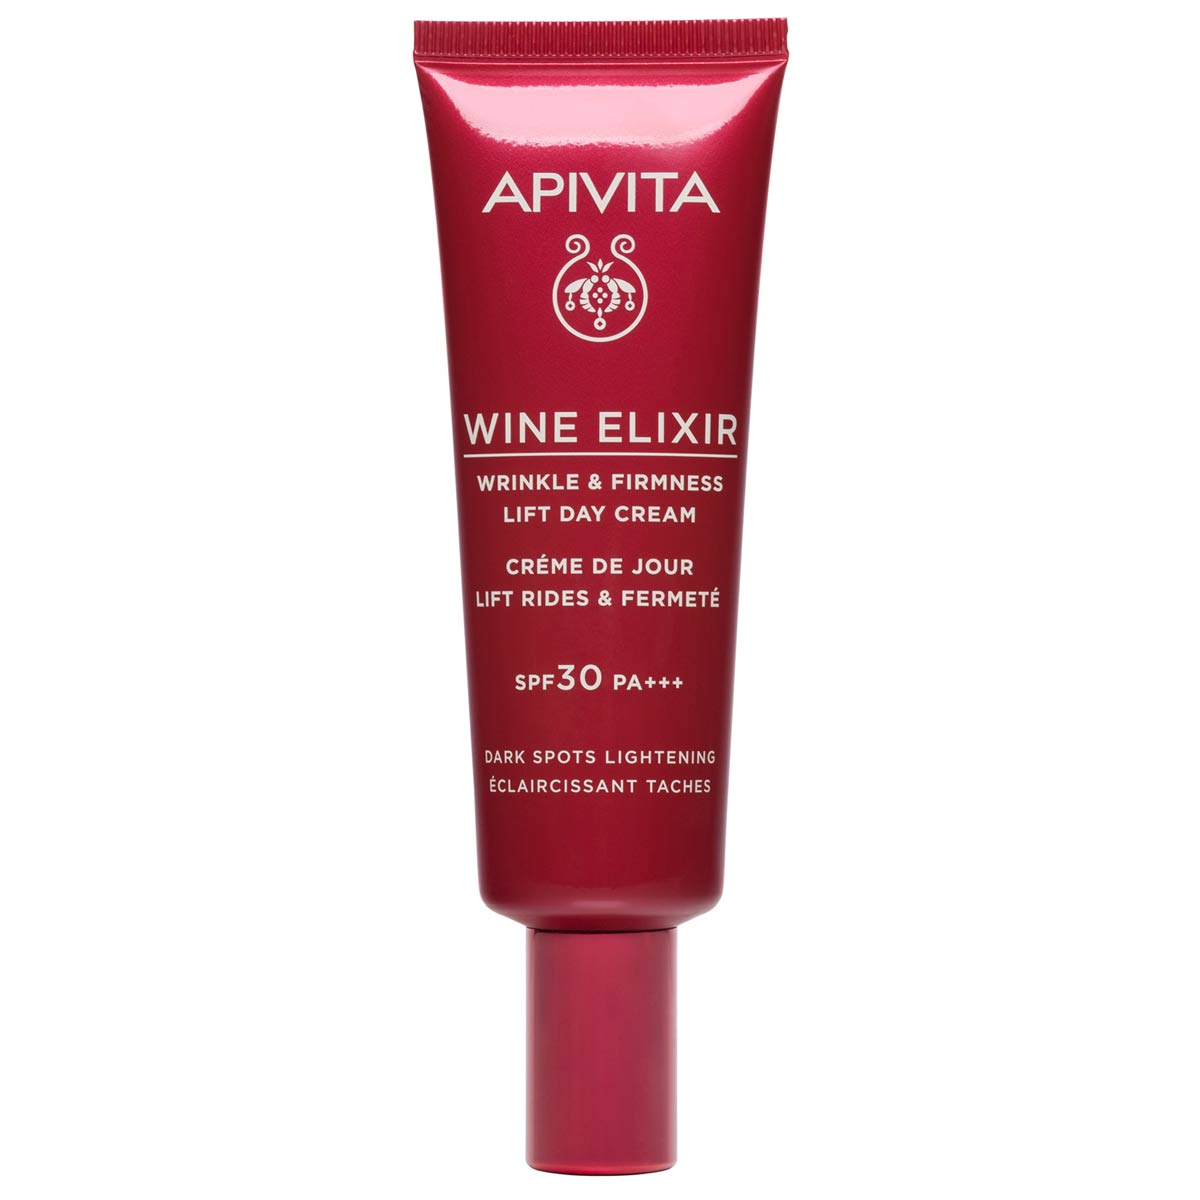 APIVITA WINE ELIXIR Wrinkle & Firmness Lift Day Cream - Dark Spots Lightening SPF30 40ml